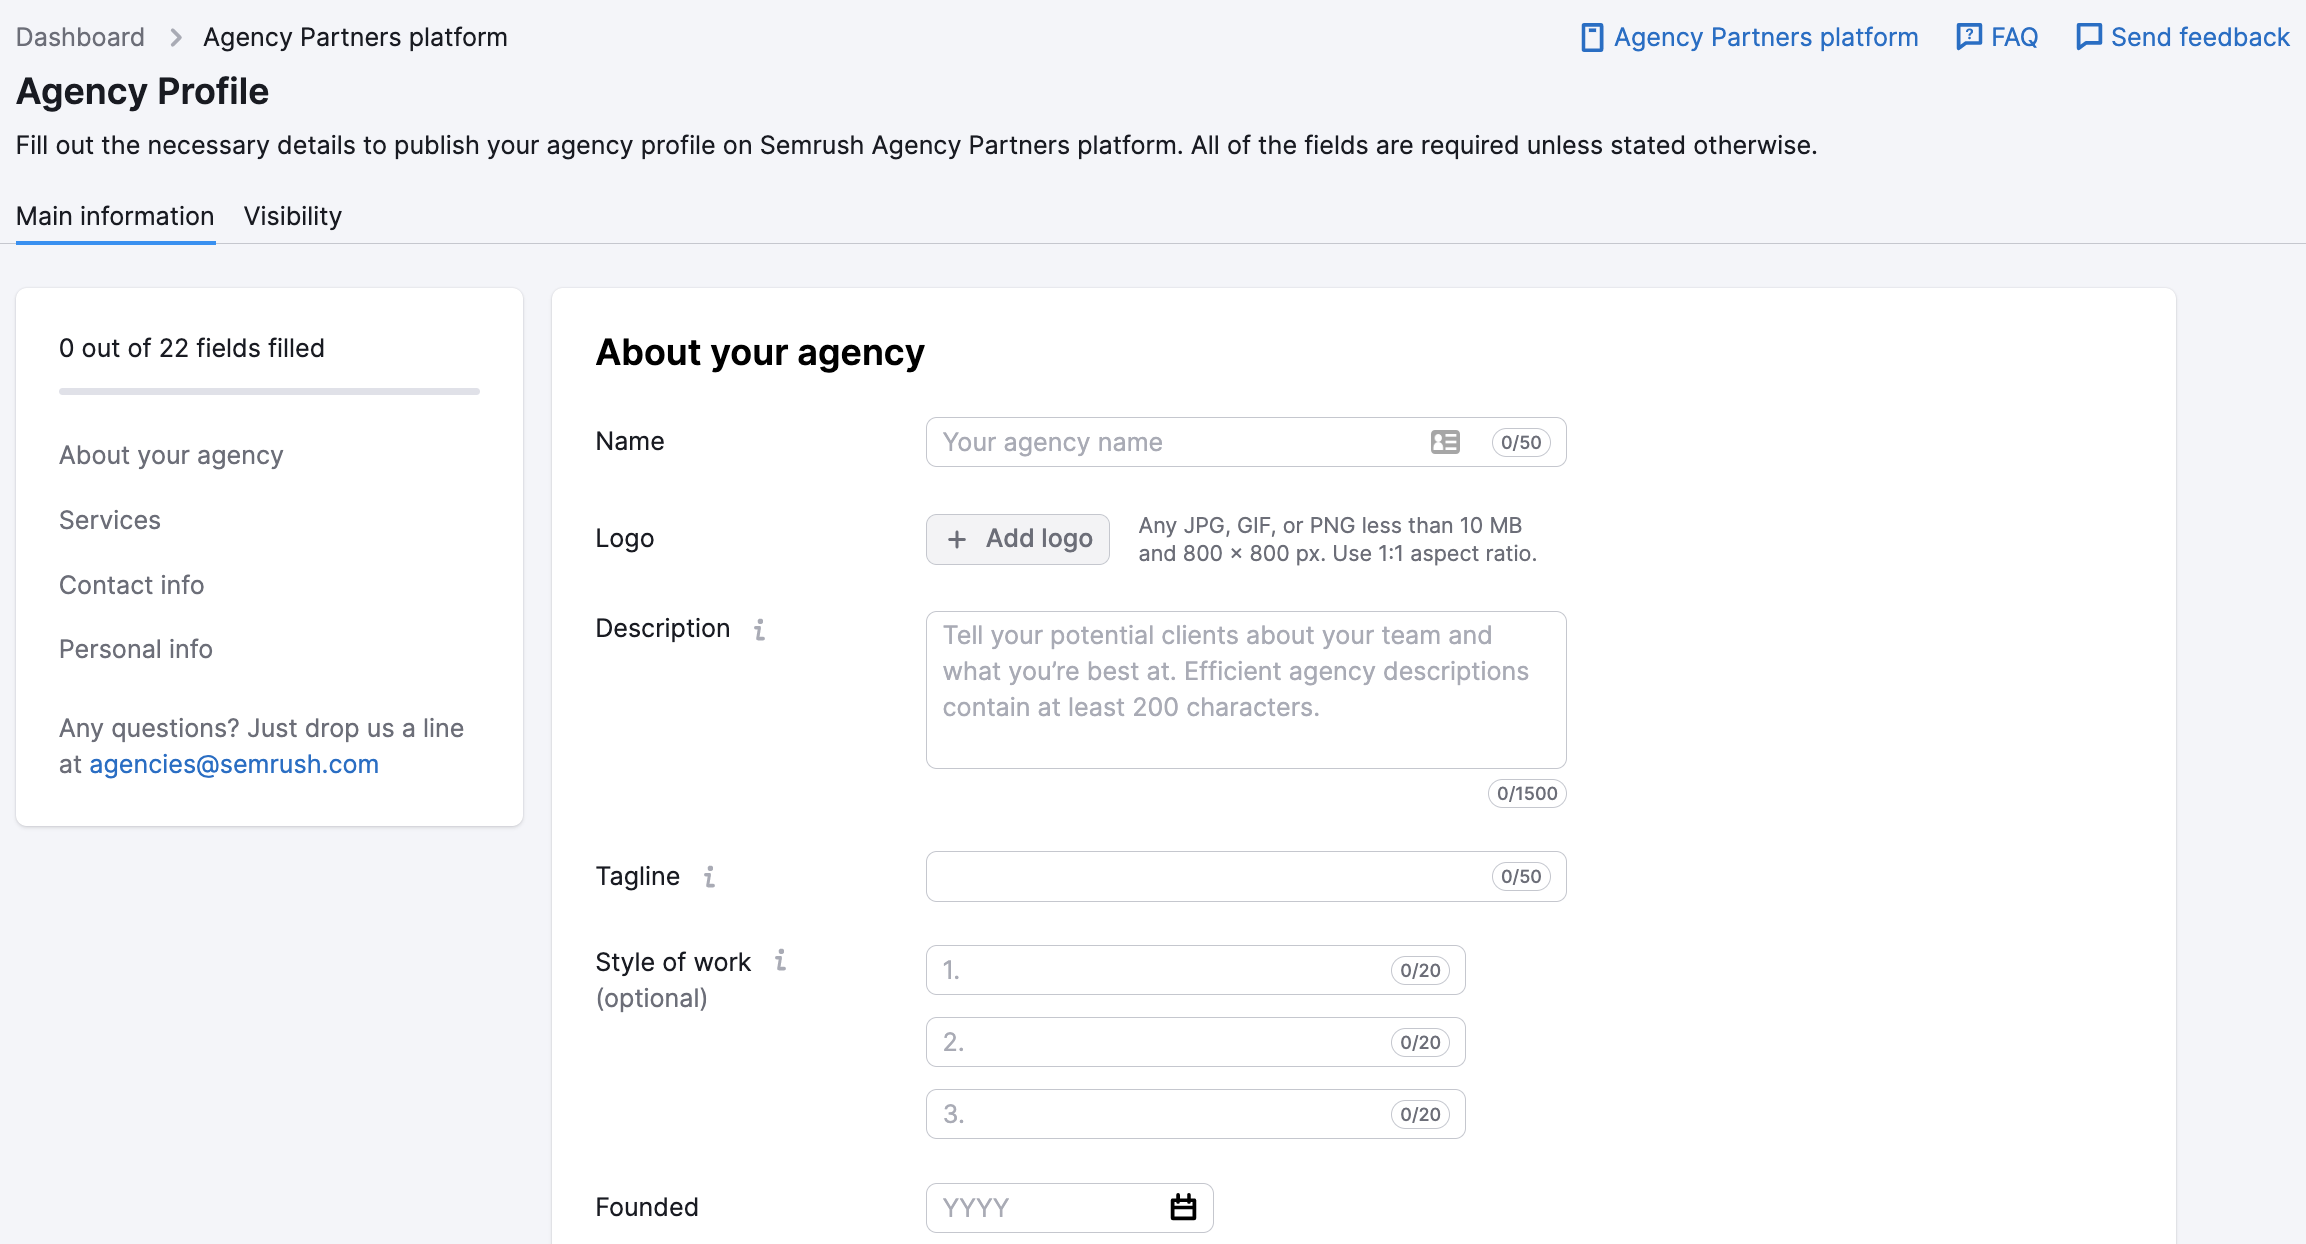 Agency Partners Platform image 2